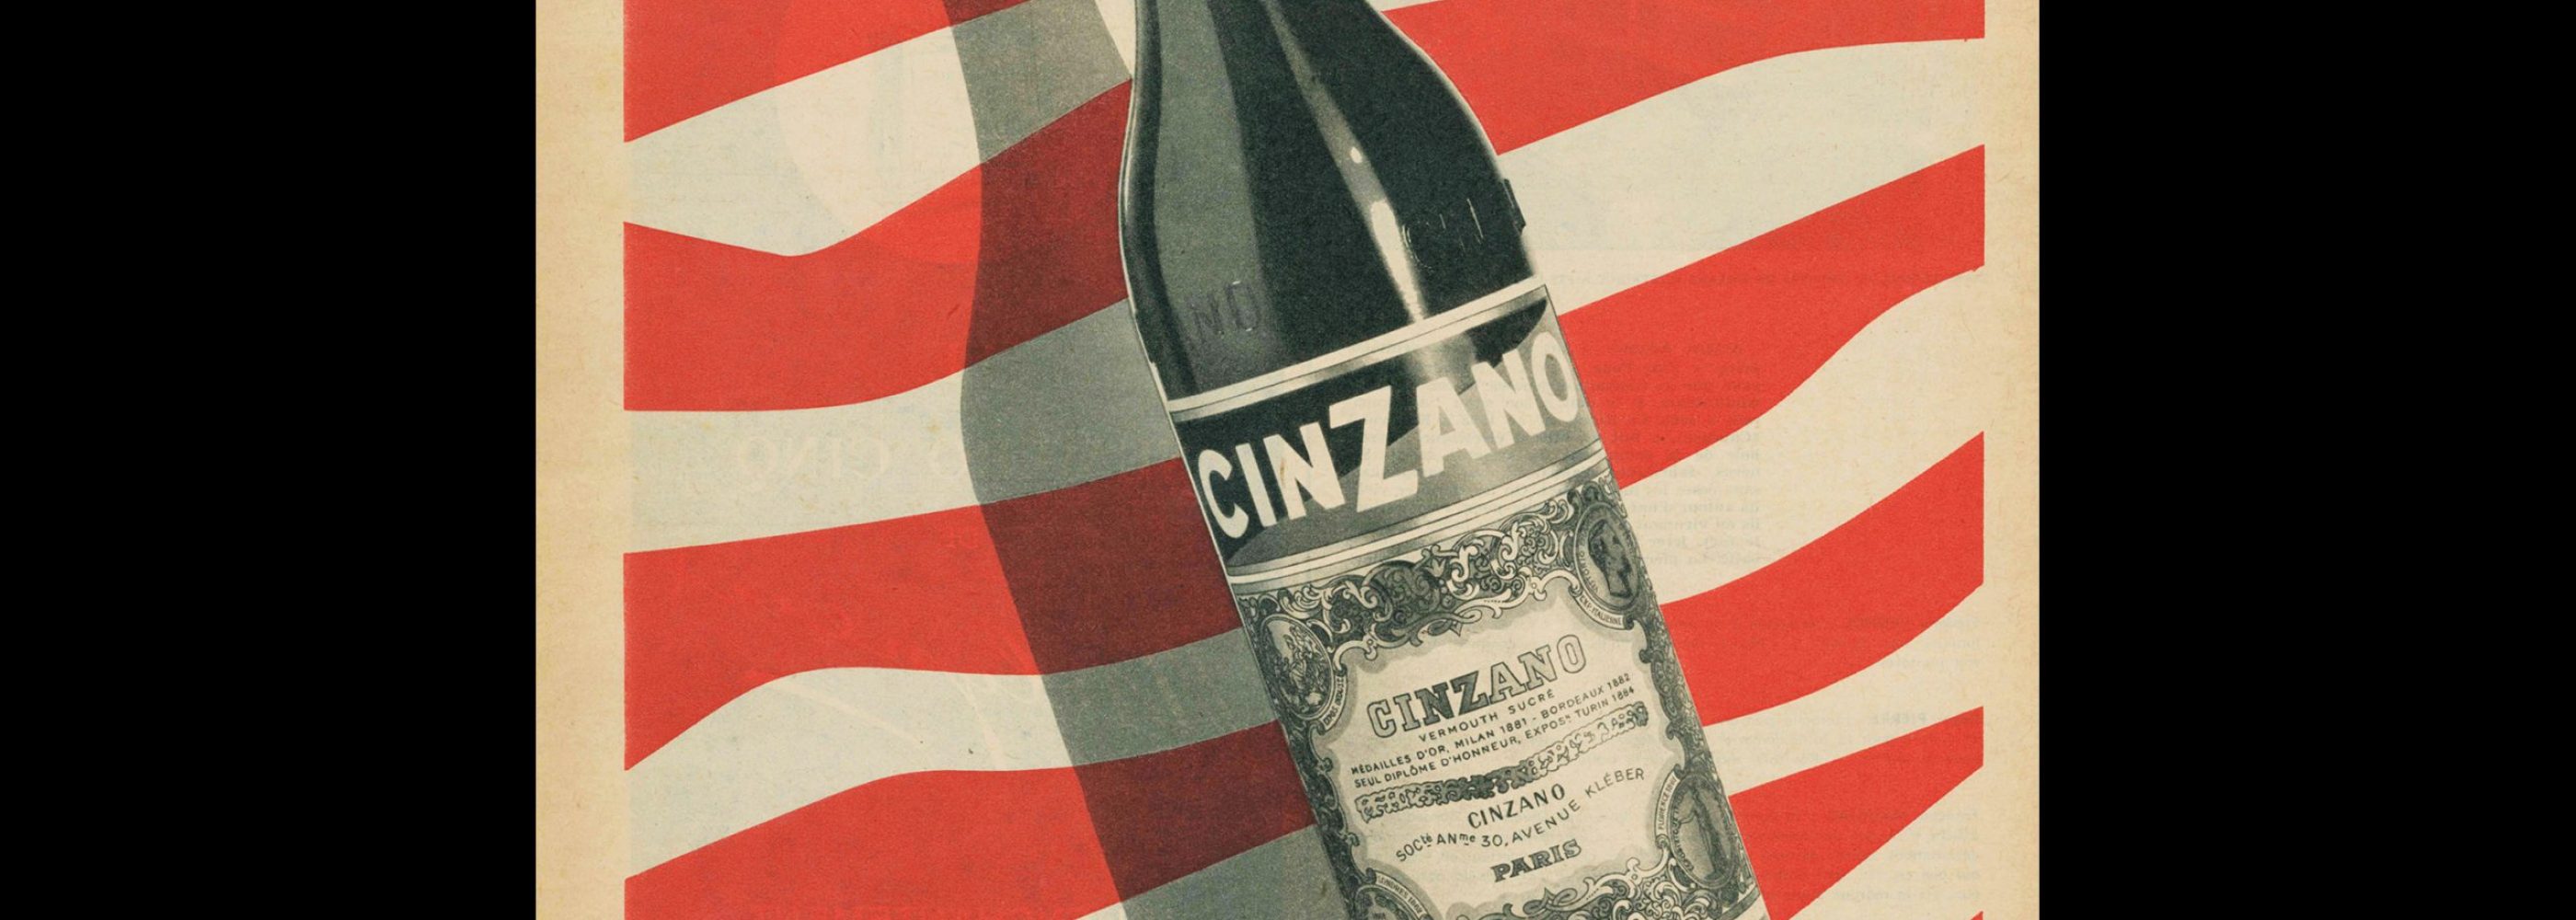 Cinzano, Advertisement, 1955. Design by Guy Georget.